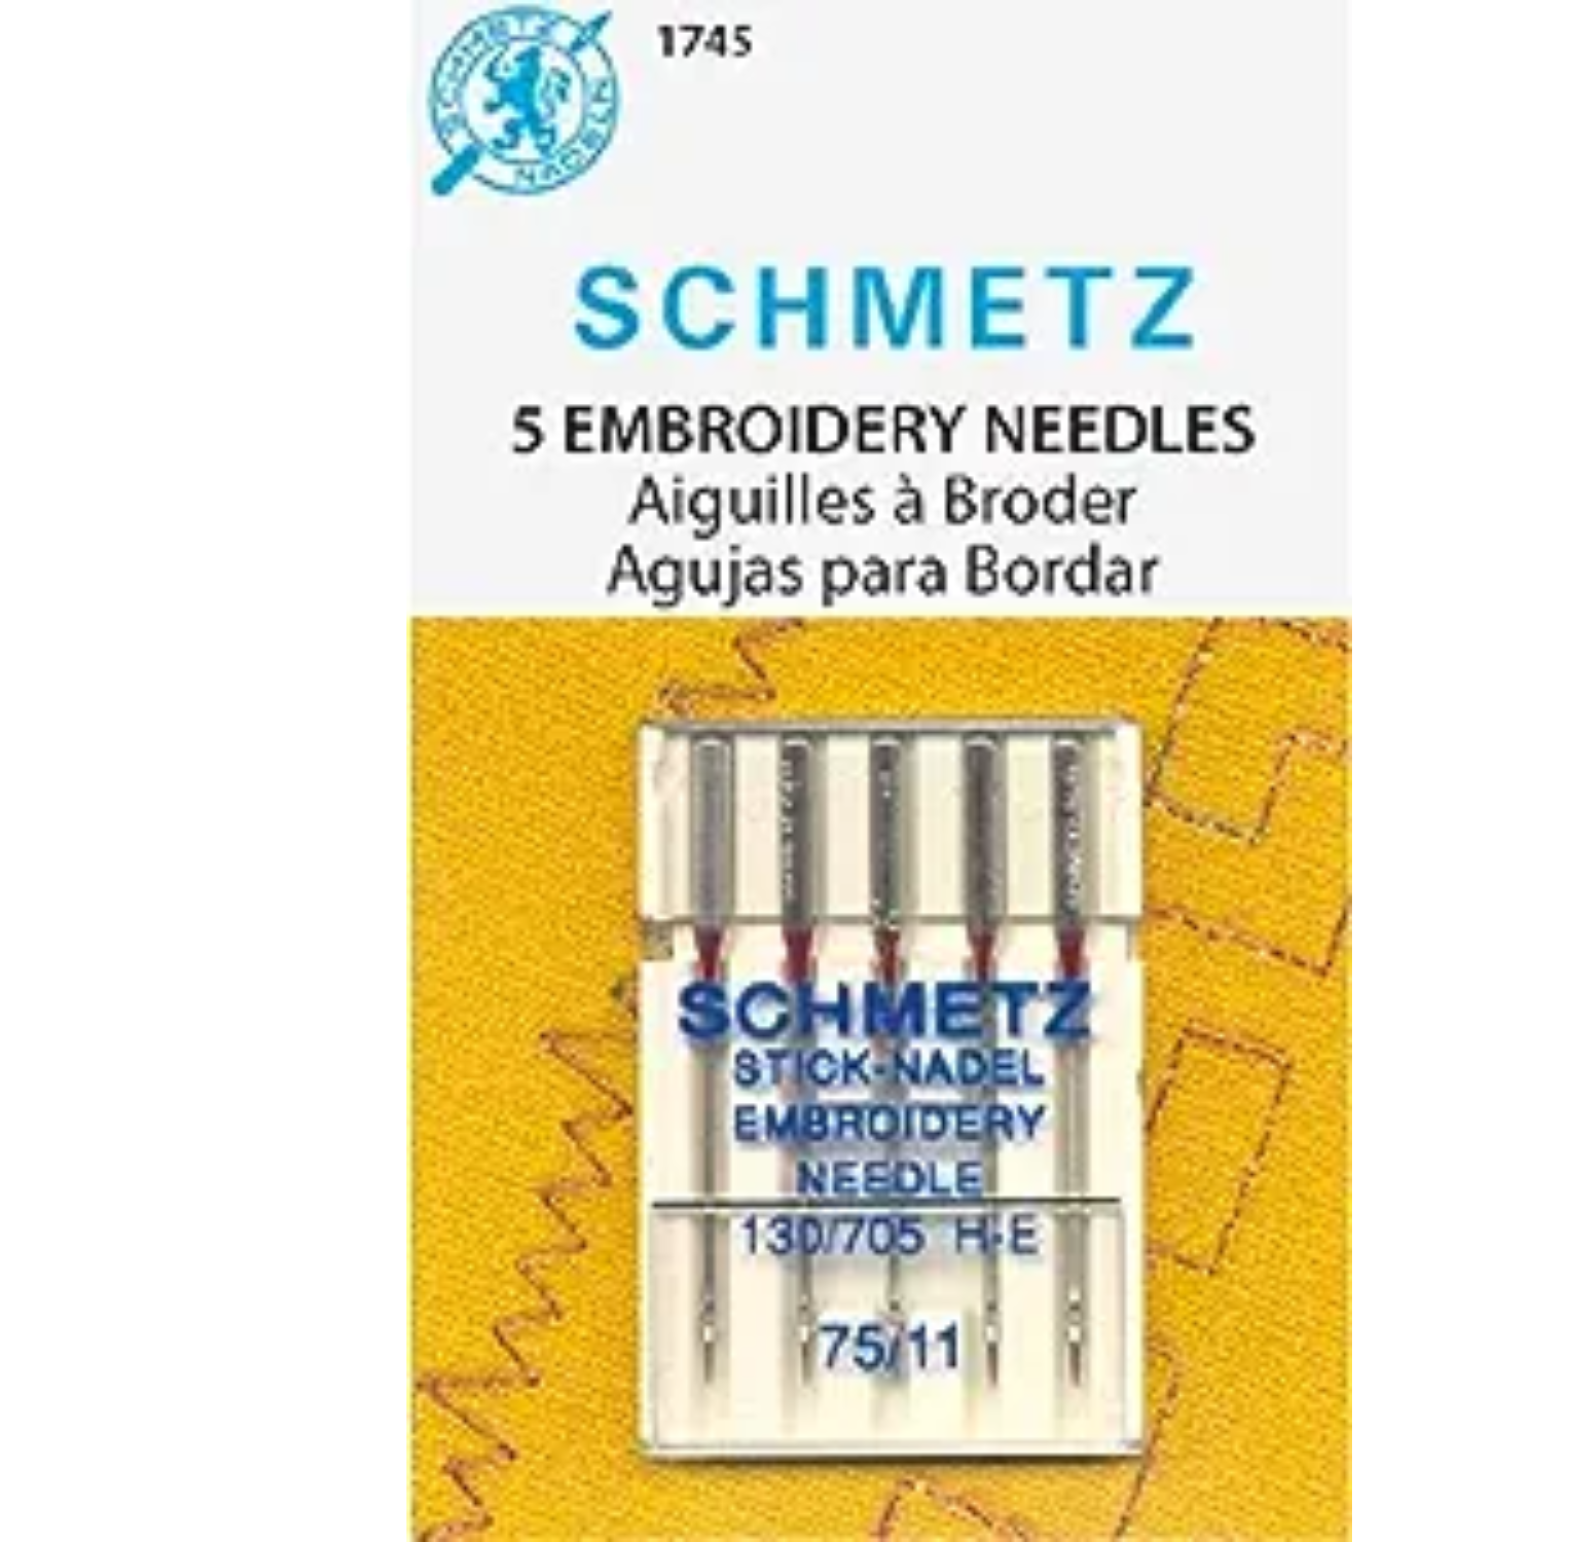 Schmetz Embroidery Needles (5 pack)